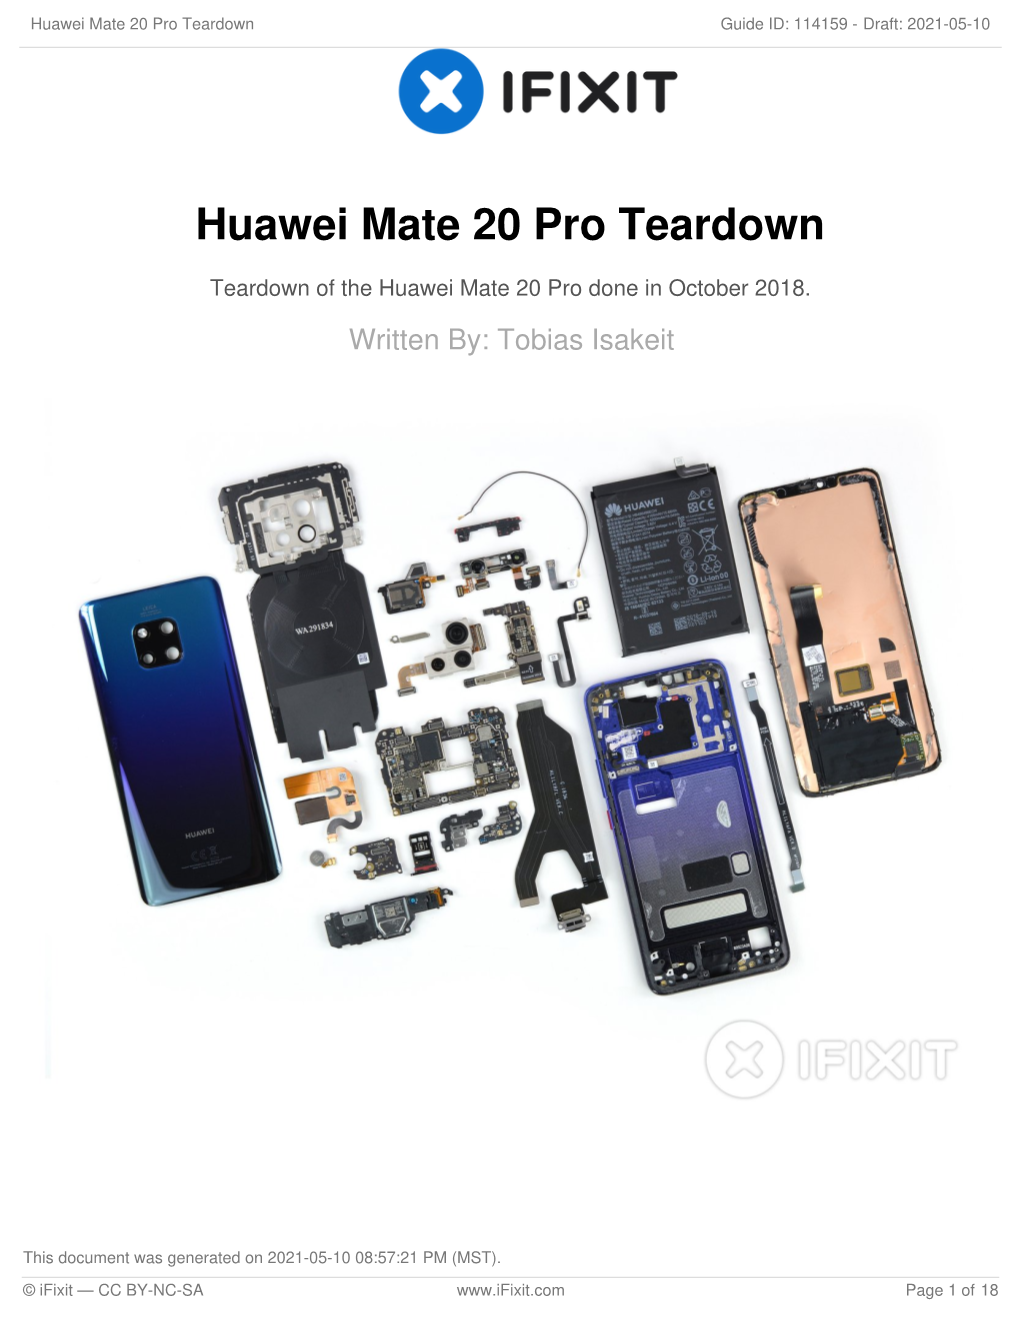 Huawei Mate 20 Pro Teardown Guide ID: 114159 - Draft: 2021-05-10